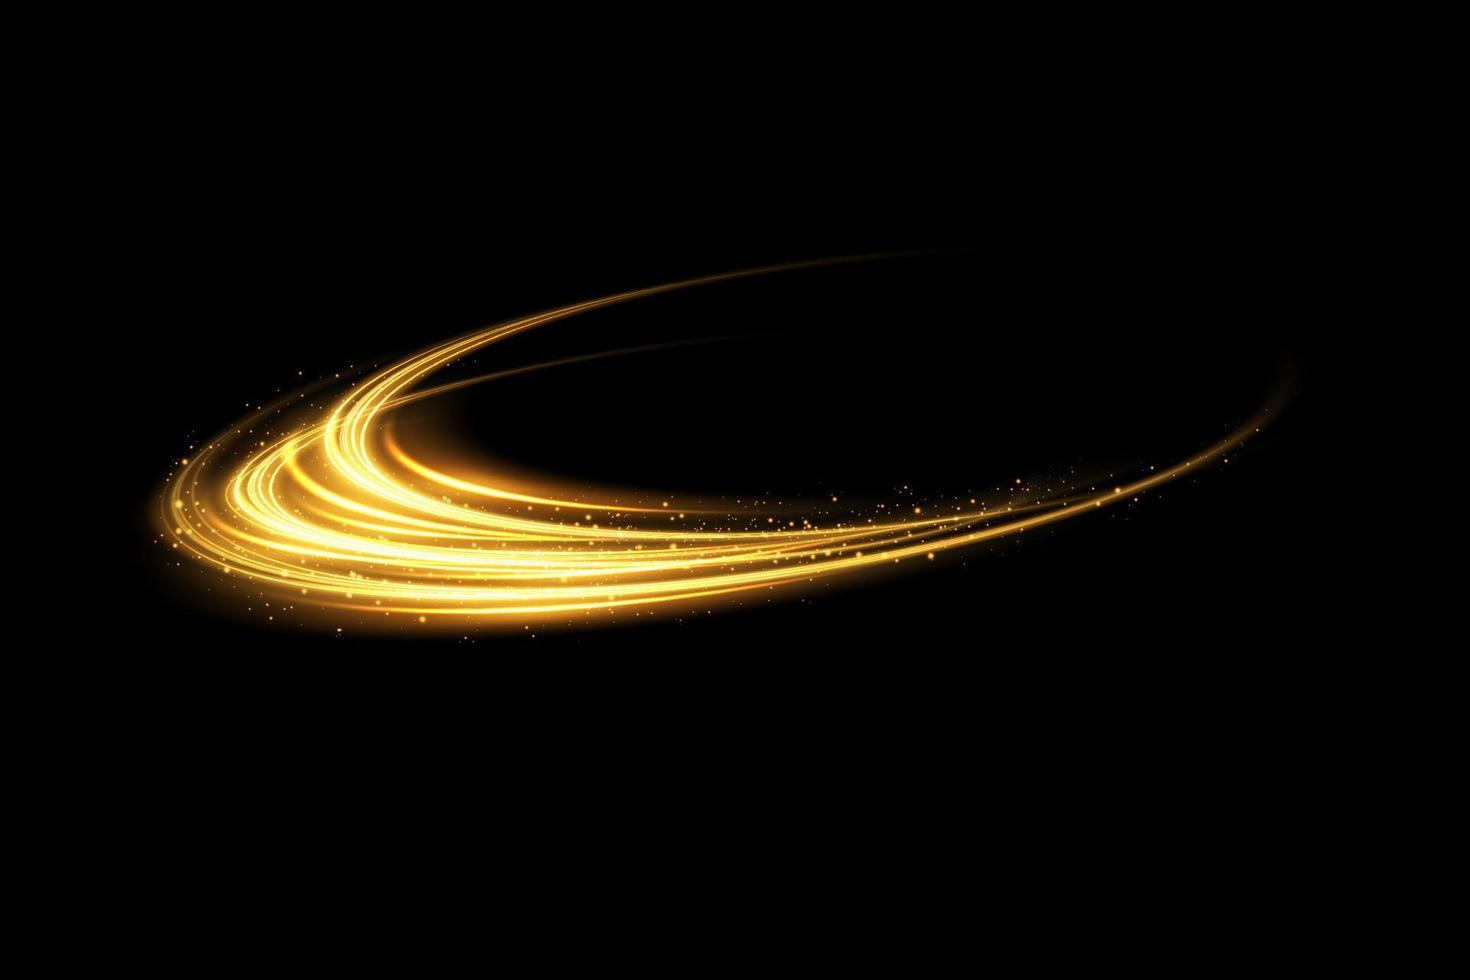 magi gyllene gnistor på en mörk bakgrund. mystisk hastighet Ränder, glitter effekt. glans av kosmisk strålar. neon rader av hastighet och snabb vind. glöd effekt, kraftfull energi. vektor